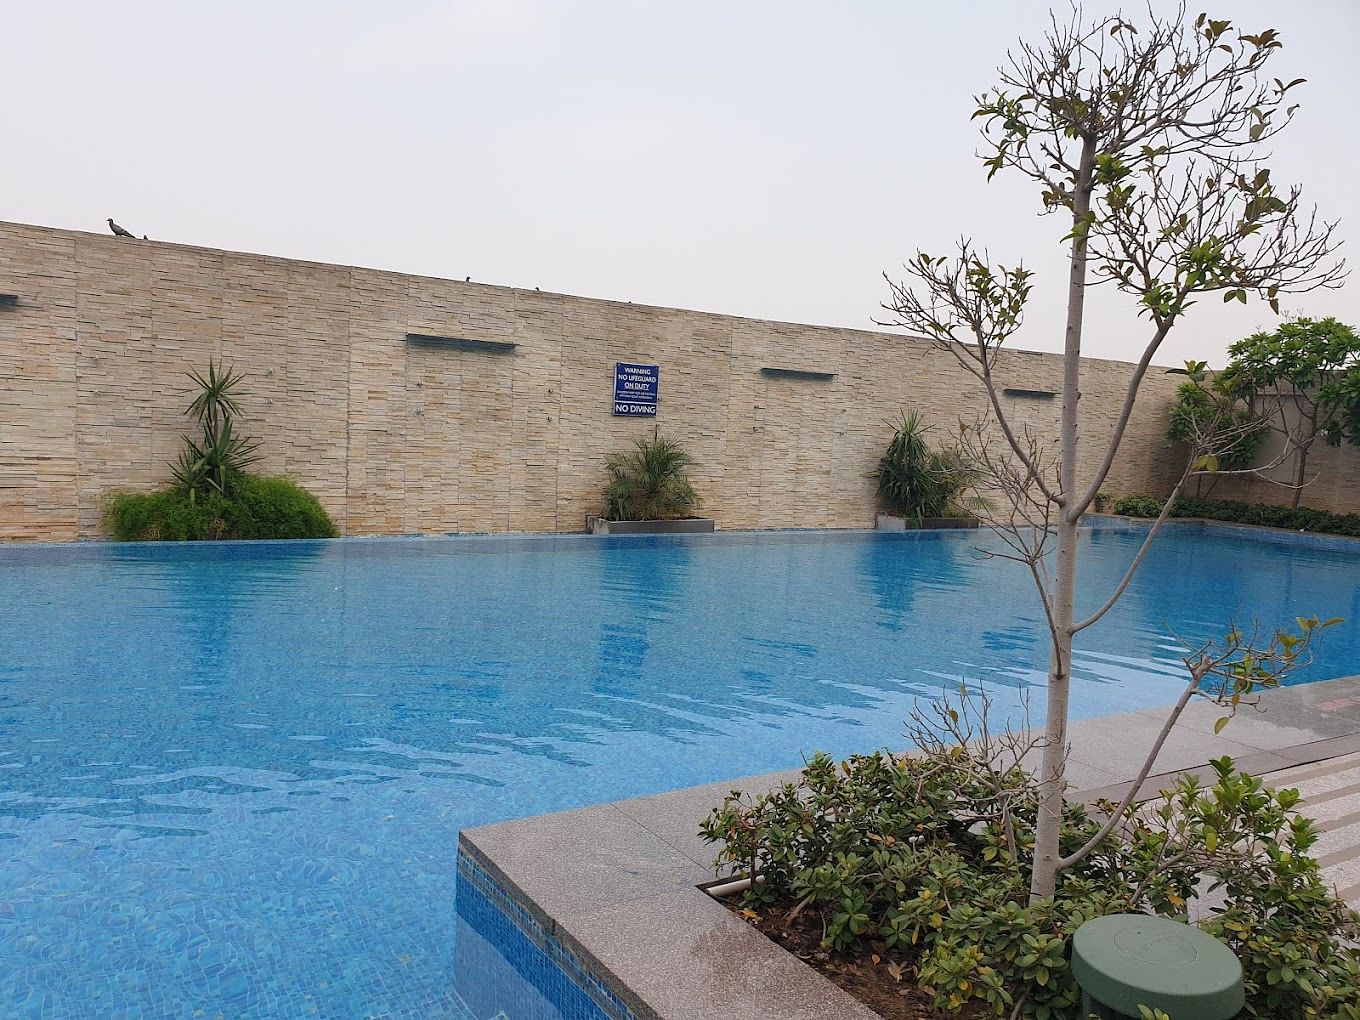 Radisson Blu Hotel in Sector 20, Faridabad